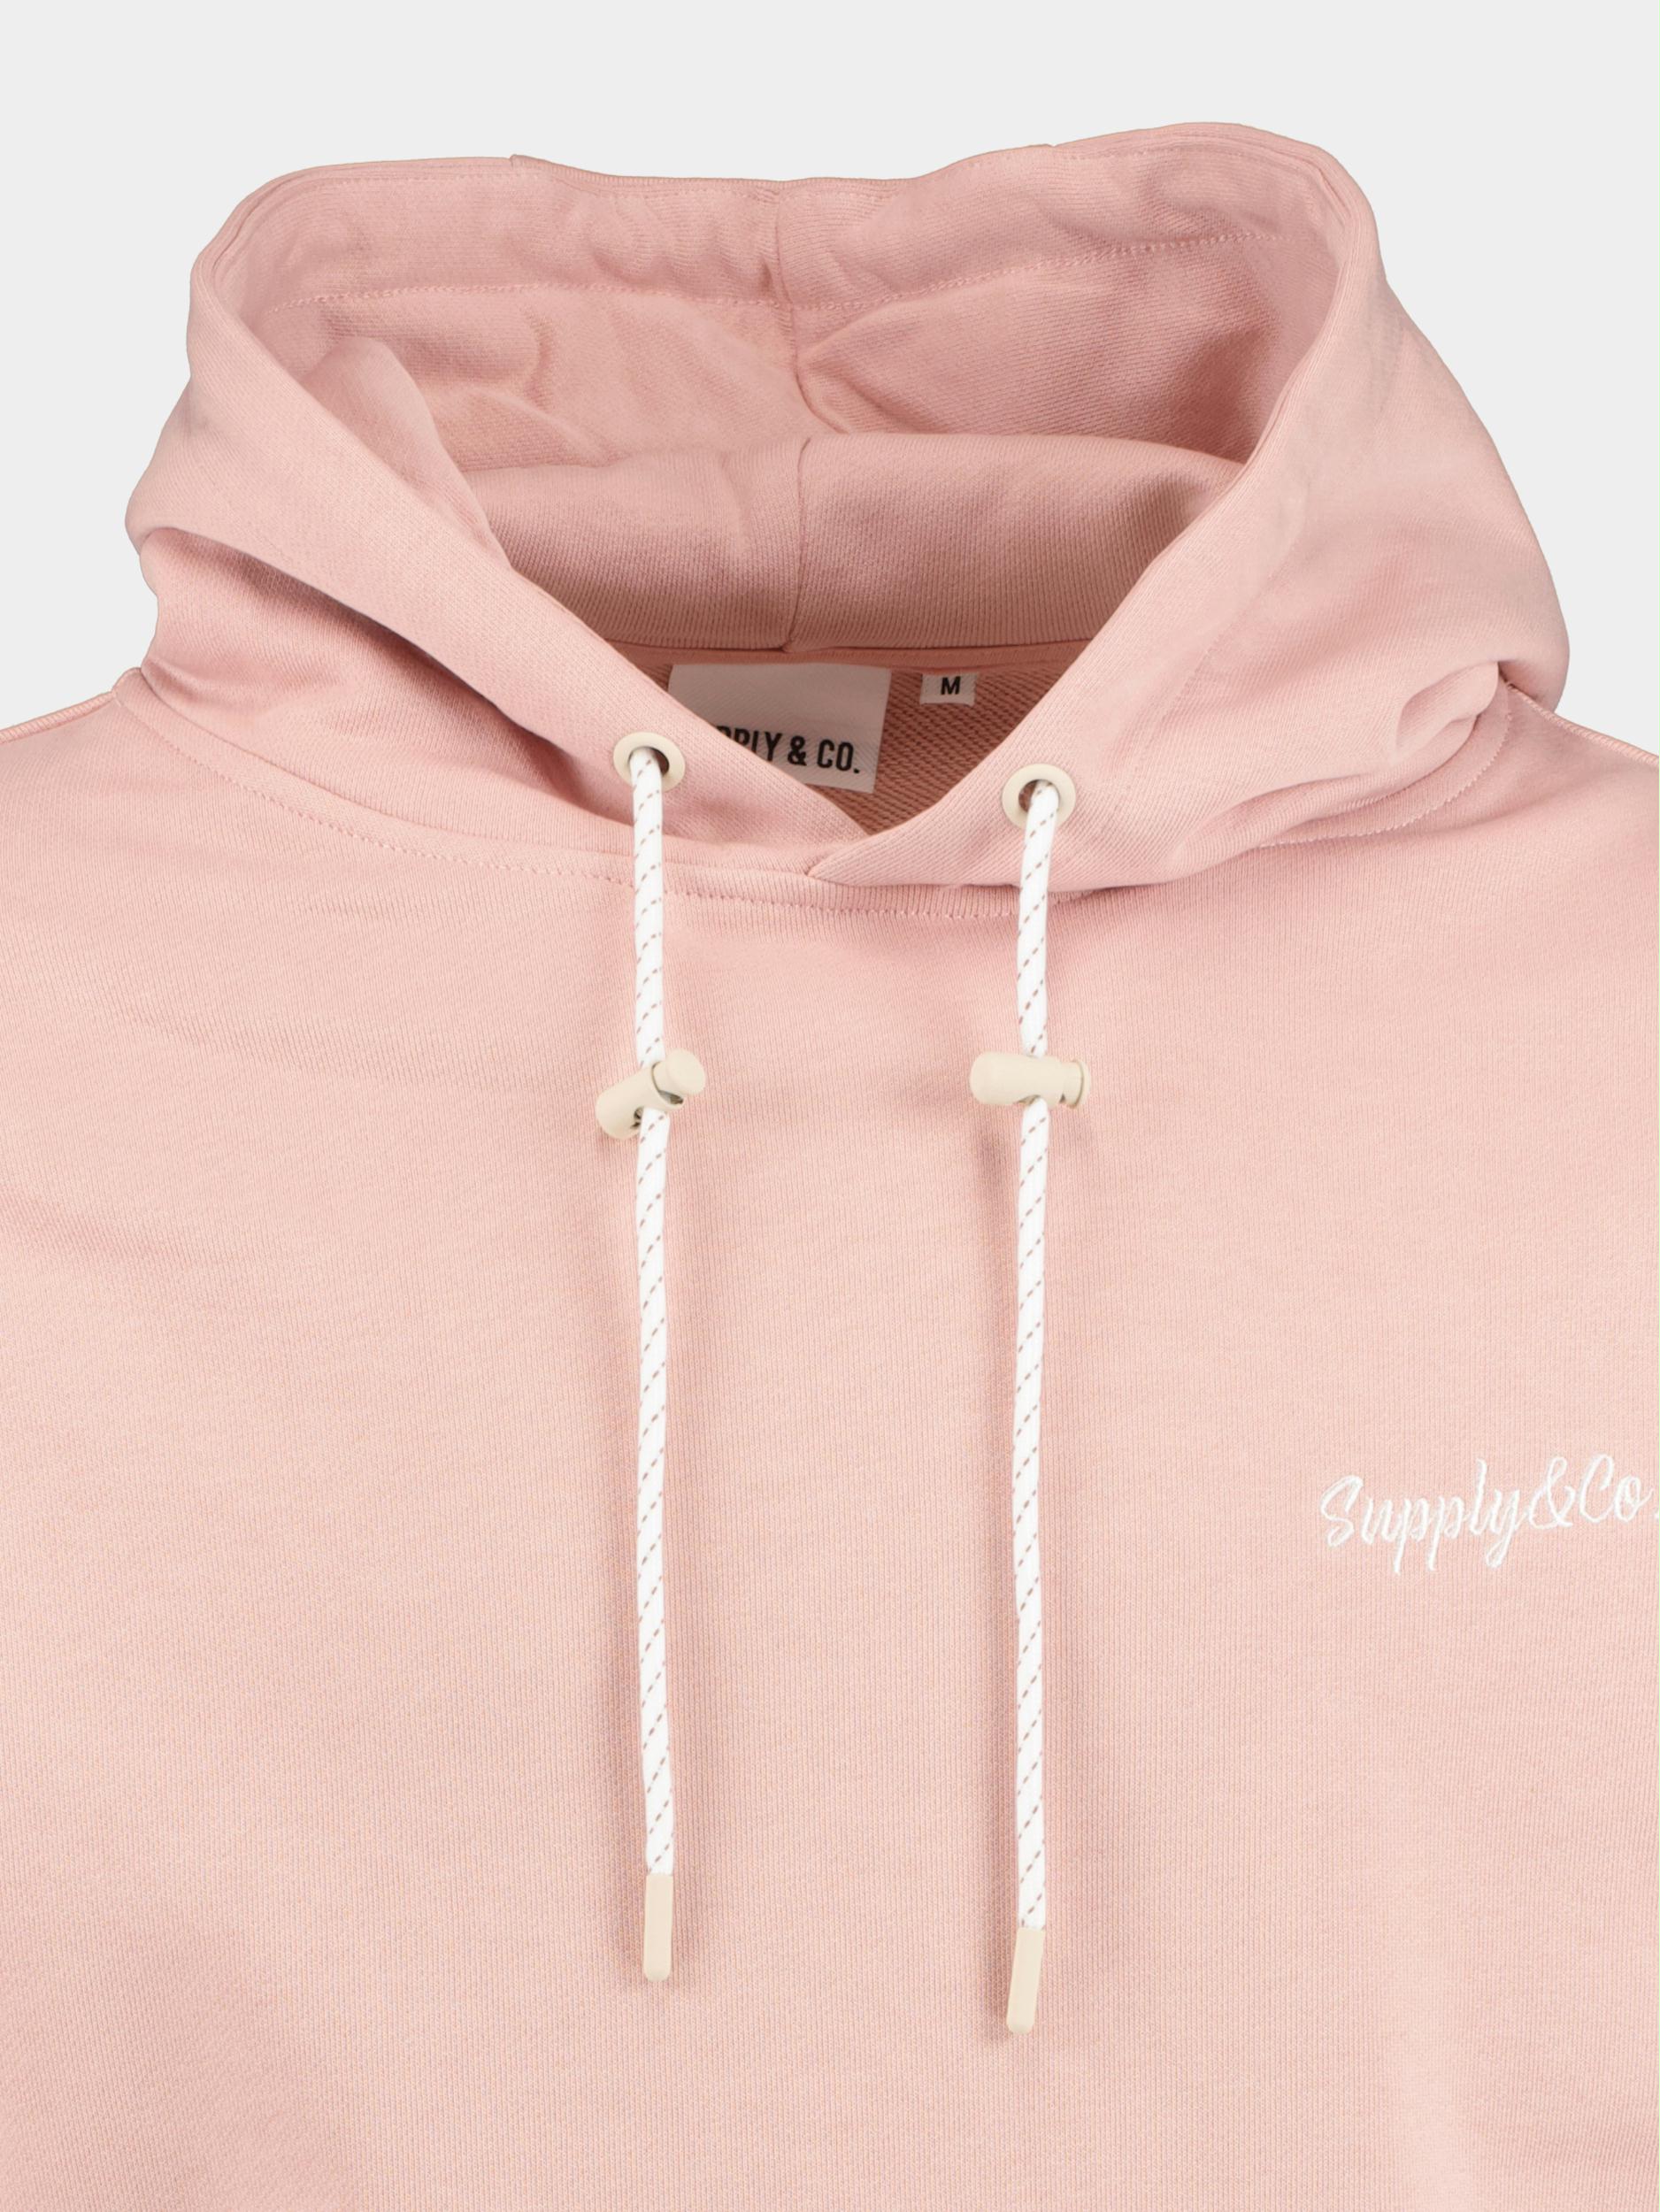 Supply & Co. Sweater Roze Nijel Hoodie With Chestembro 23112NI05/737 blush